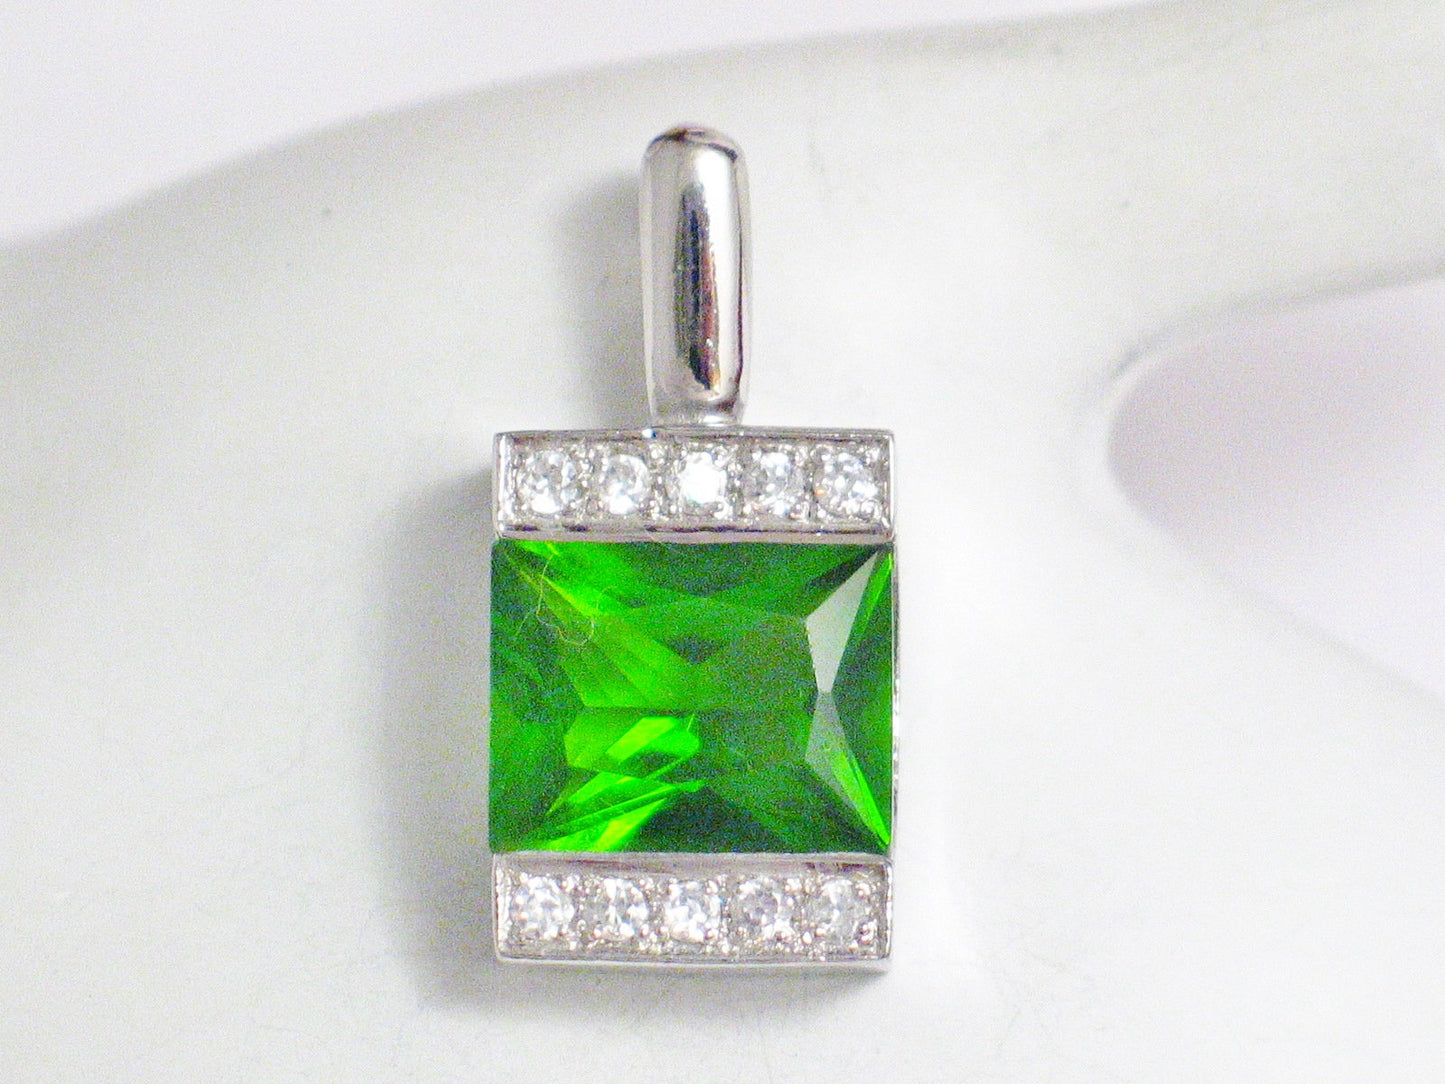 Pendant | Sterling Silver Vibrant Green Geometric Square Stone Pendant | Jewelry